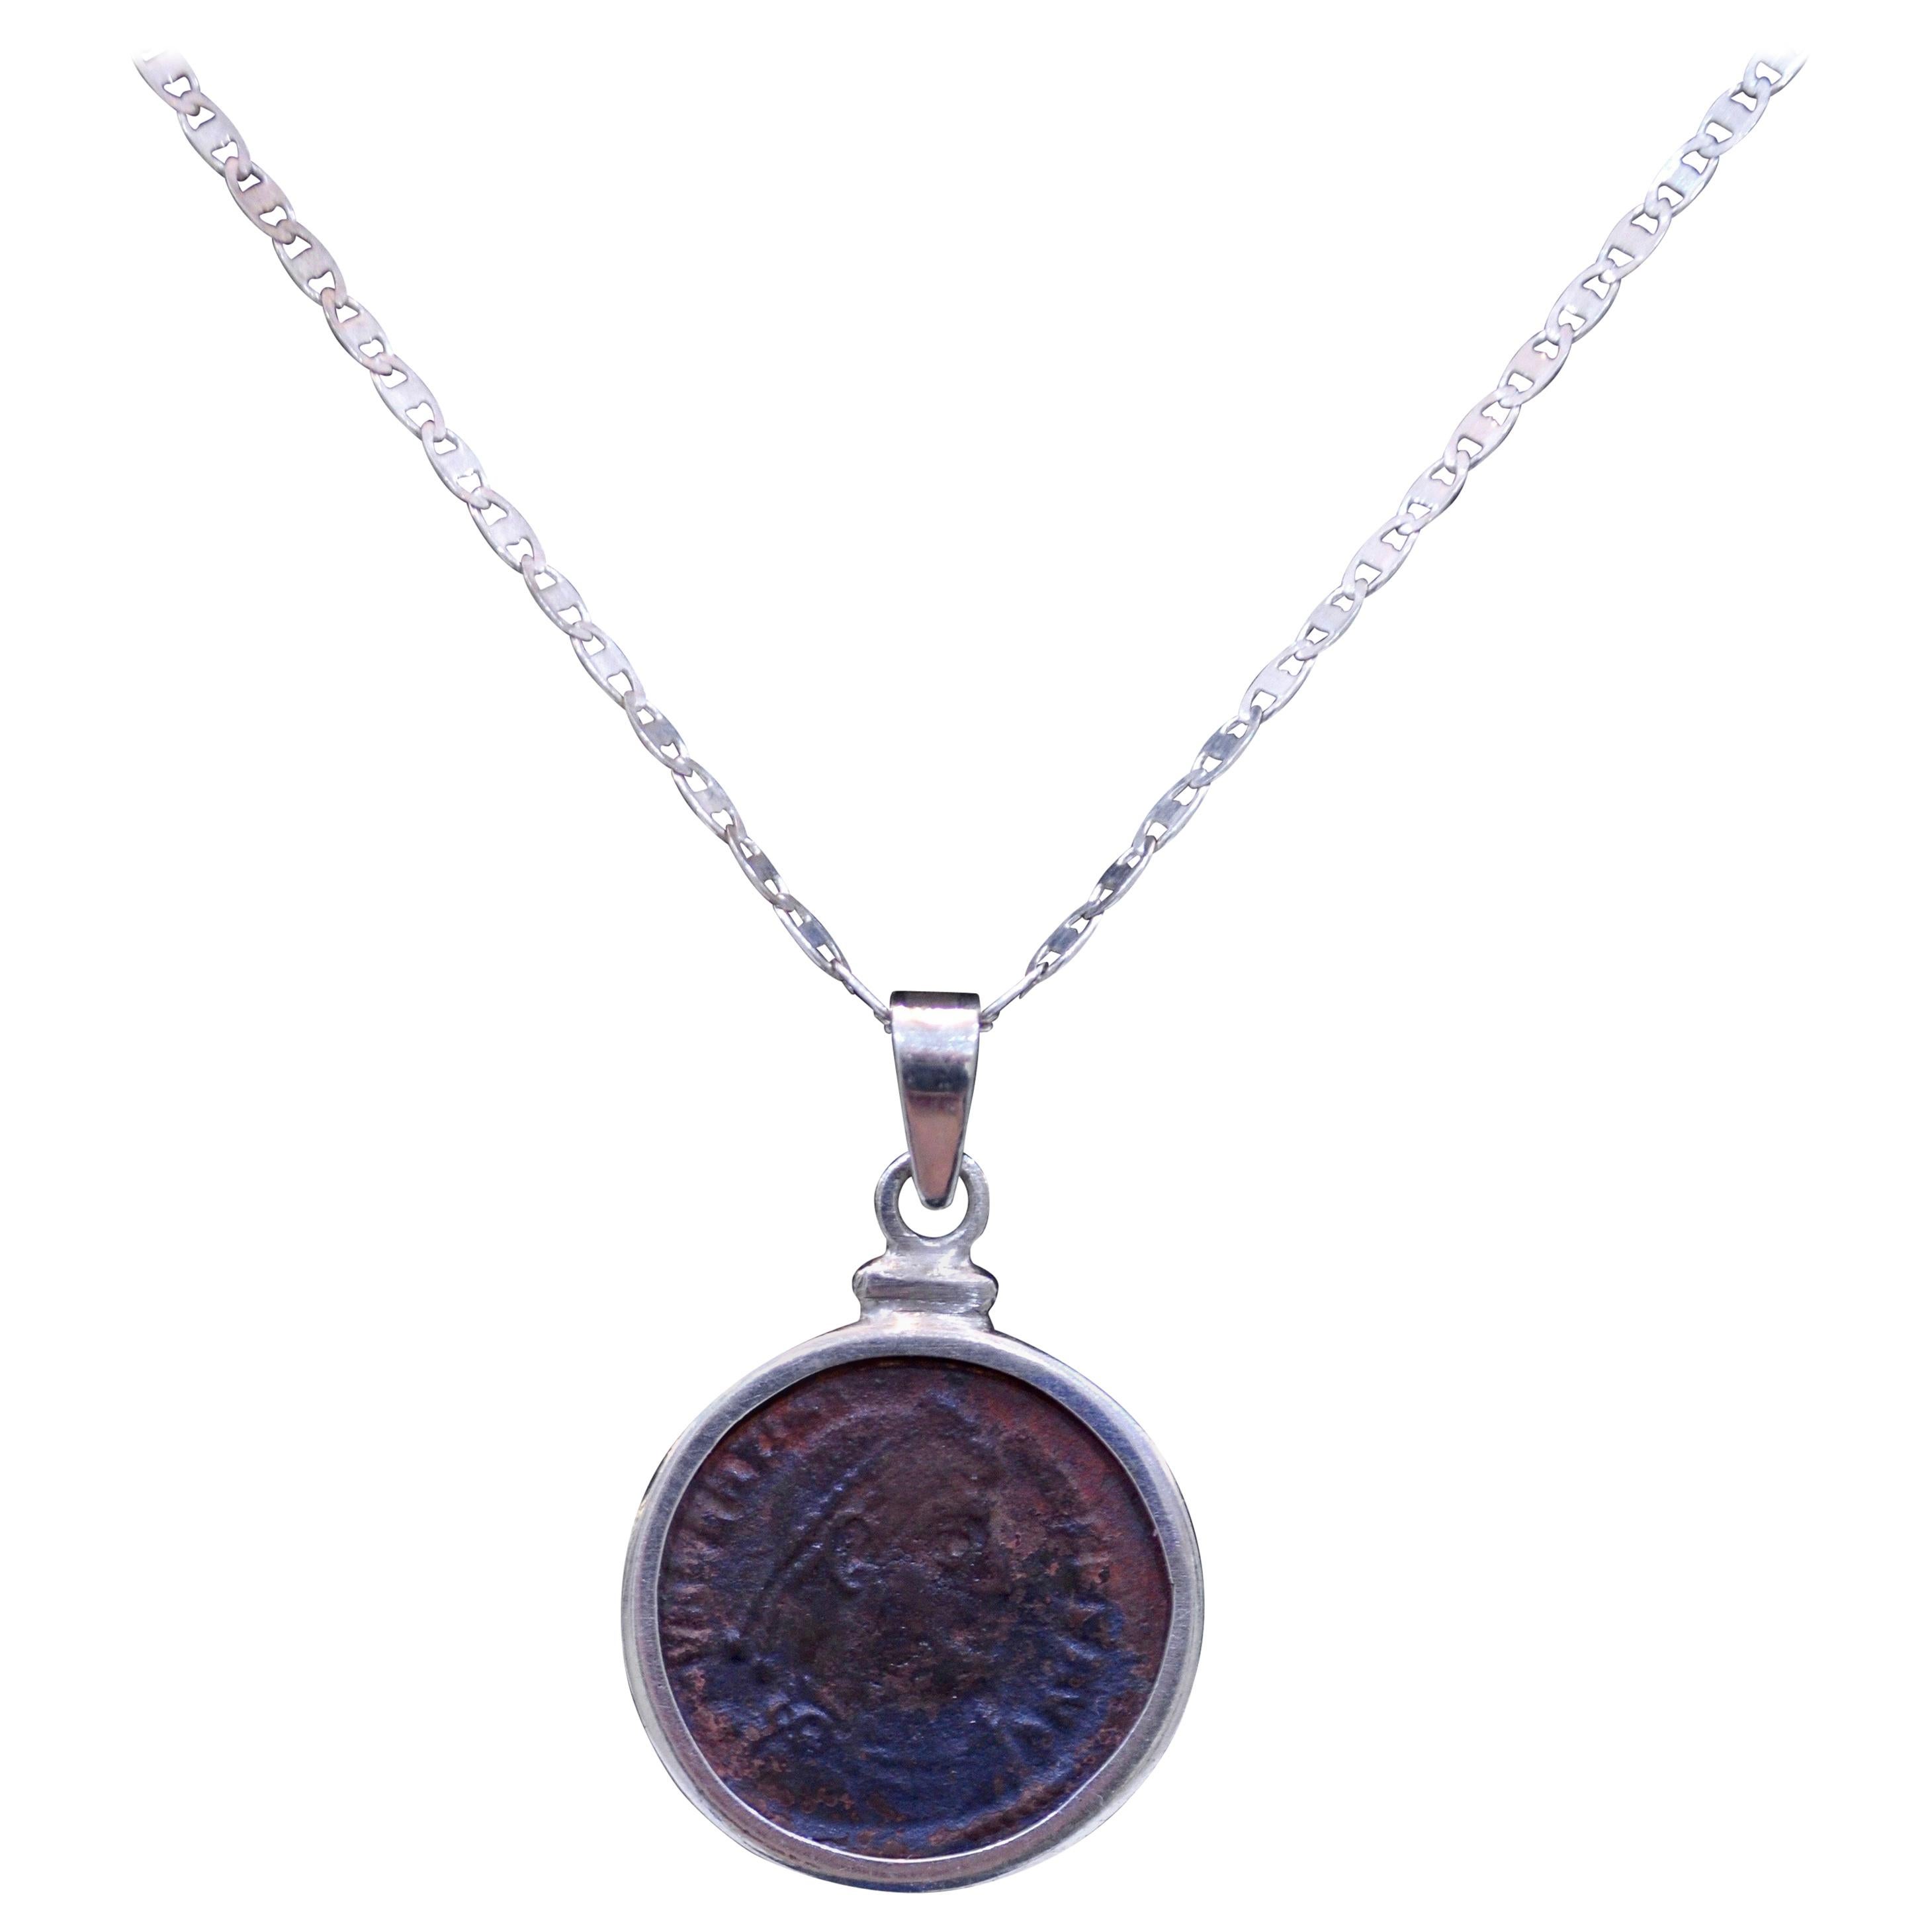 Valens Coin Silver Necklace